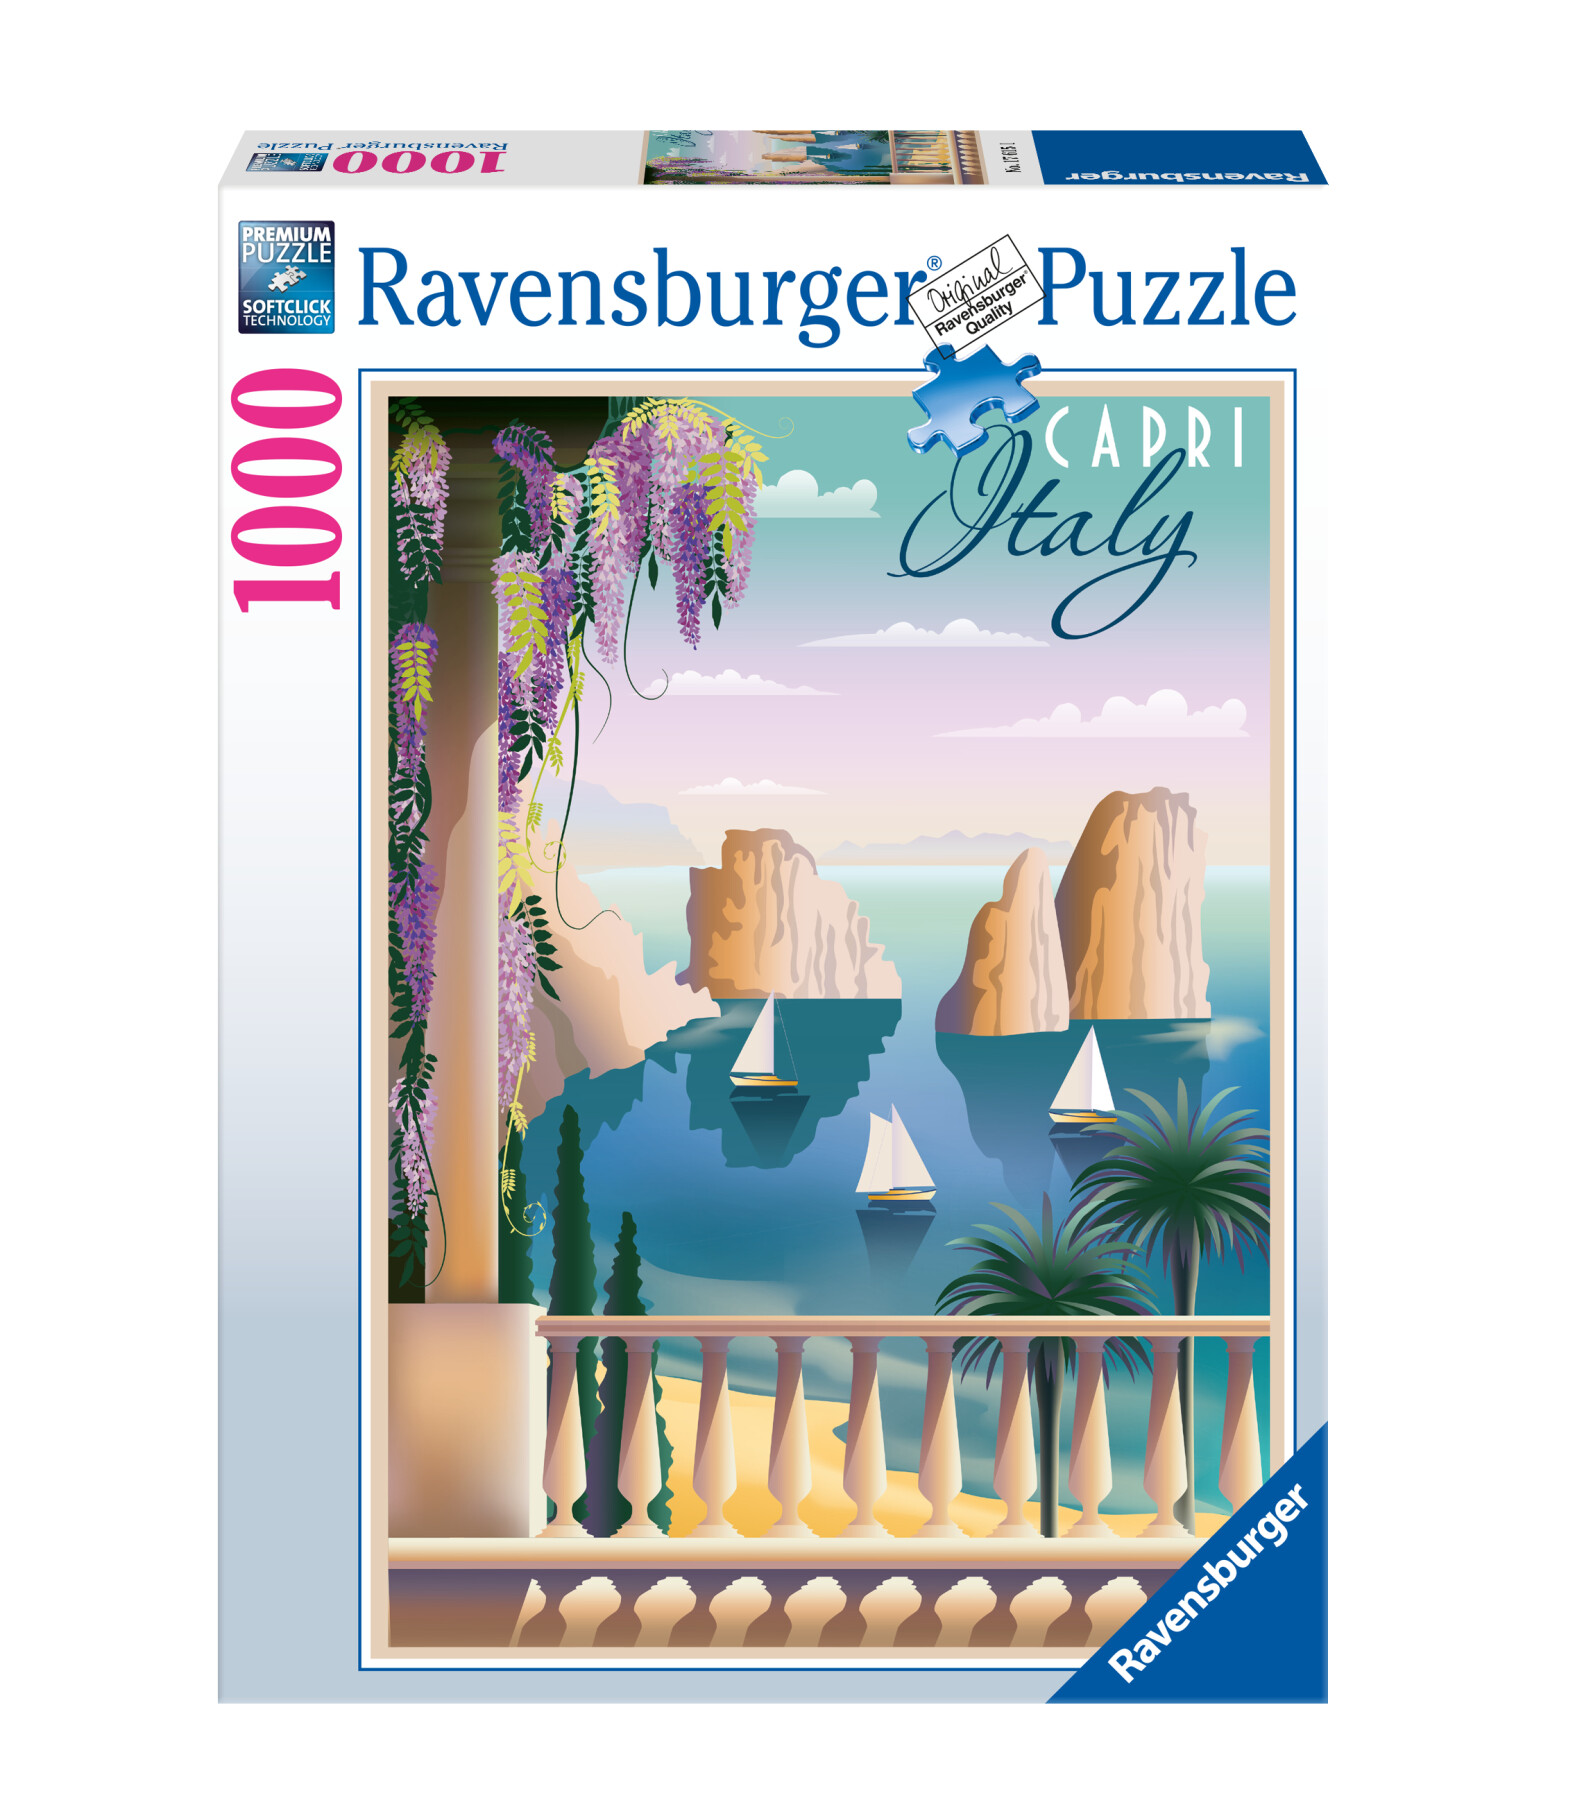 Ravensburger - puzzle cartolina da capri, italia, 1000 pezzi, puzzle adulti - RAVENSBURGER